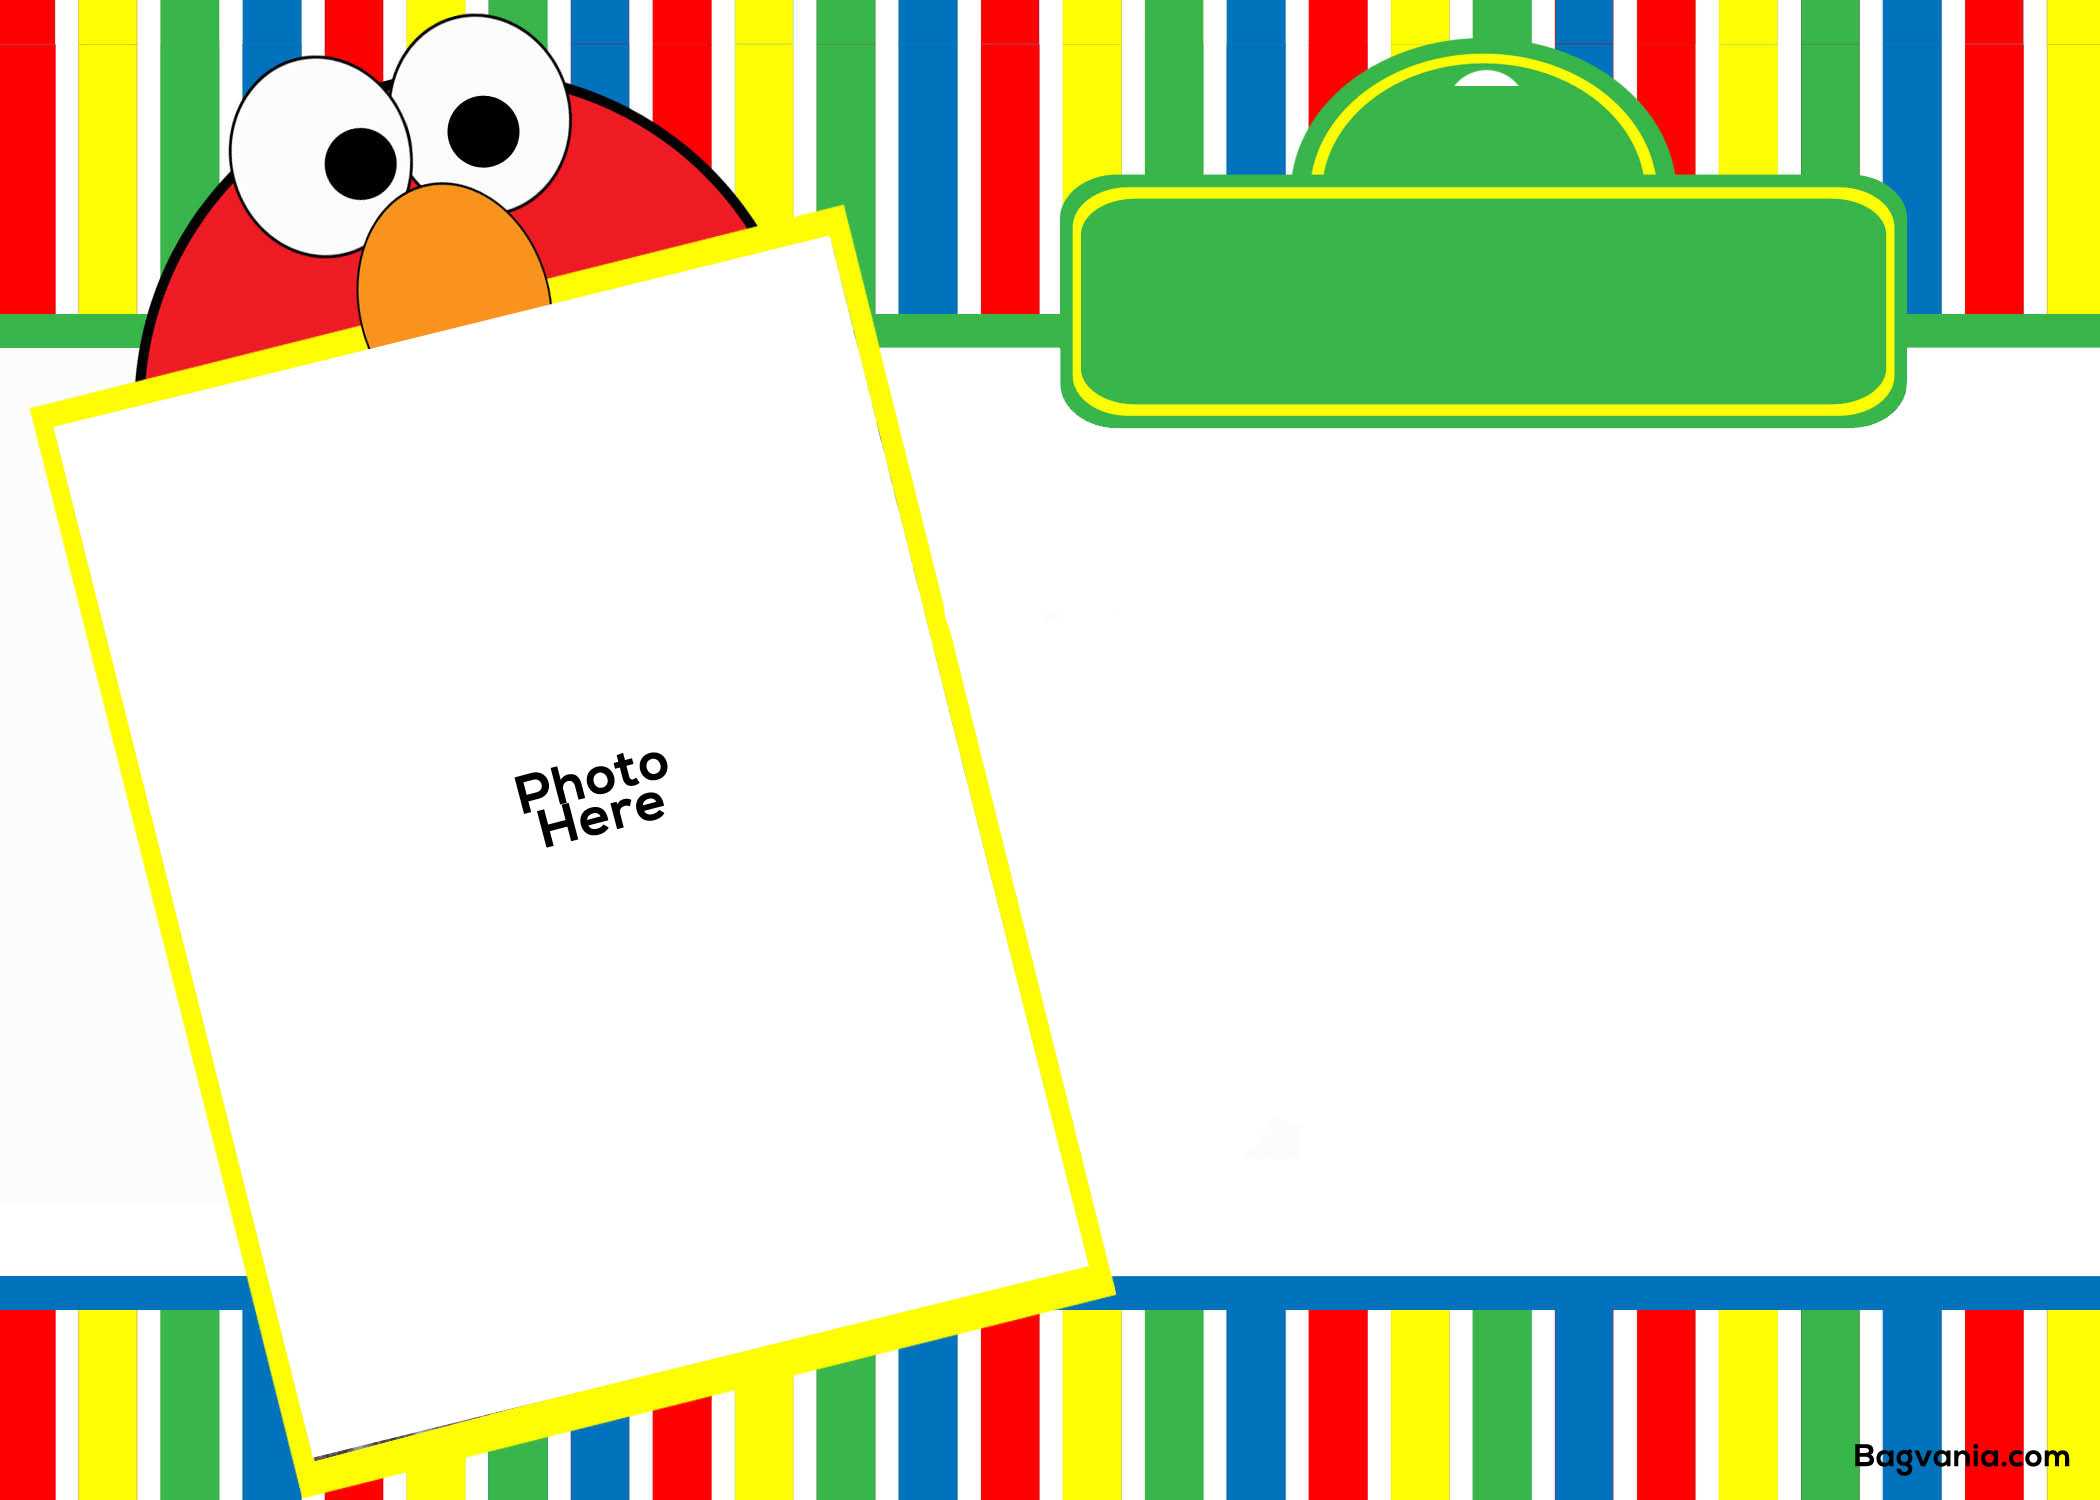 Free Printable Elmo Birthday Invitations – Bagvania Intended For Elmo Birthday Card Template